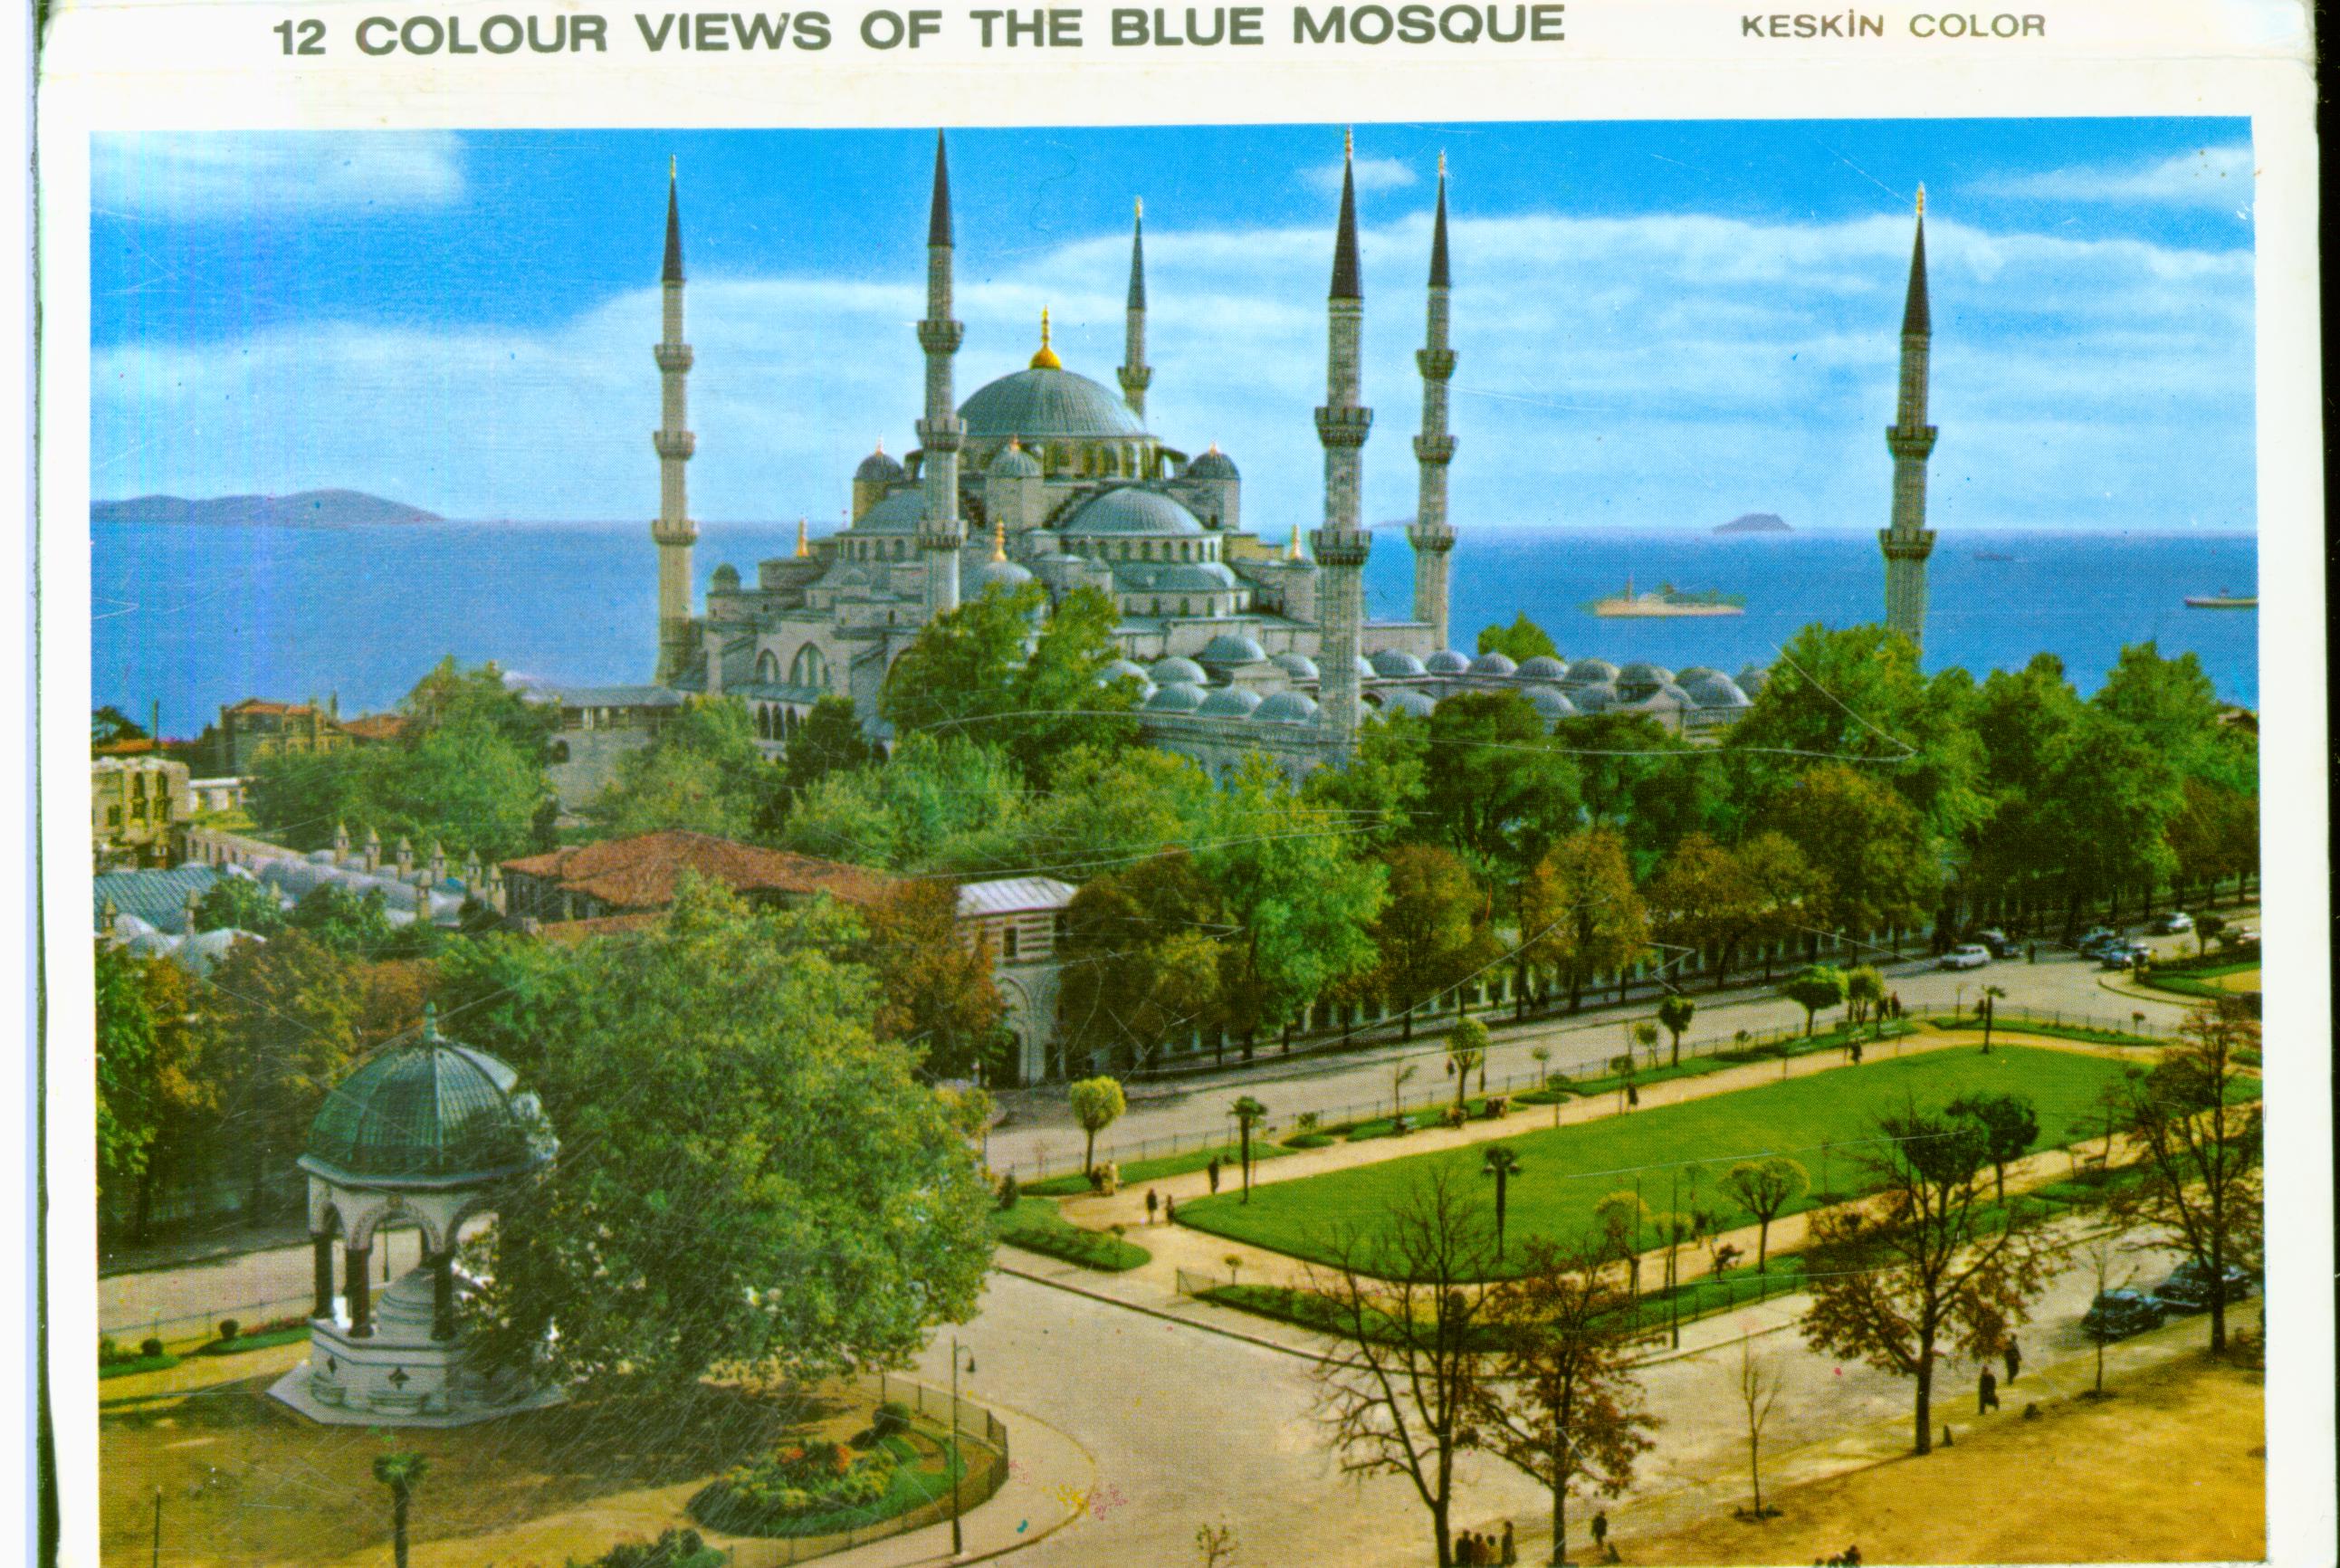 Cartes postales anciennes > CARTES POSTALES > carte postale ancienne > cartes-postales-ancienne.com Lots cartes postales Turquie